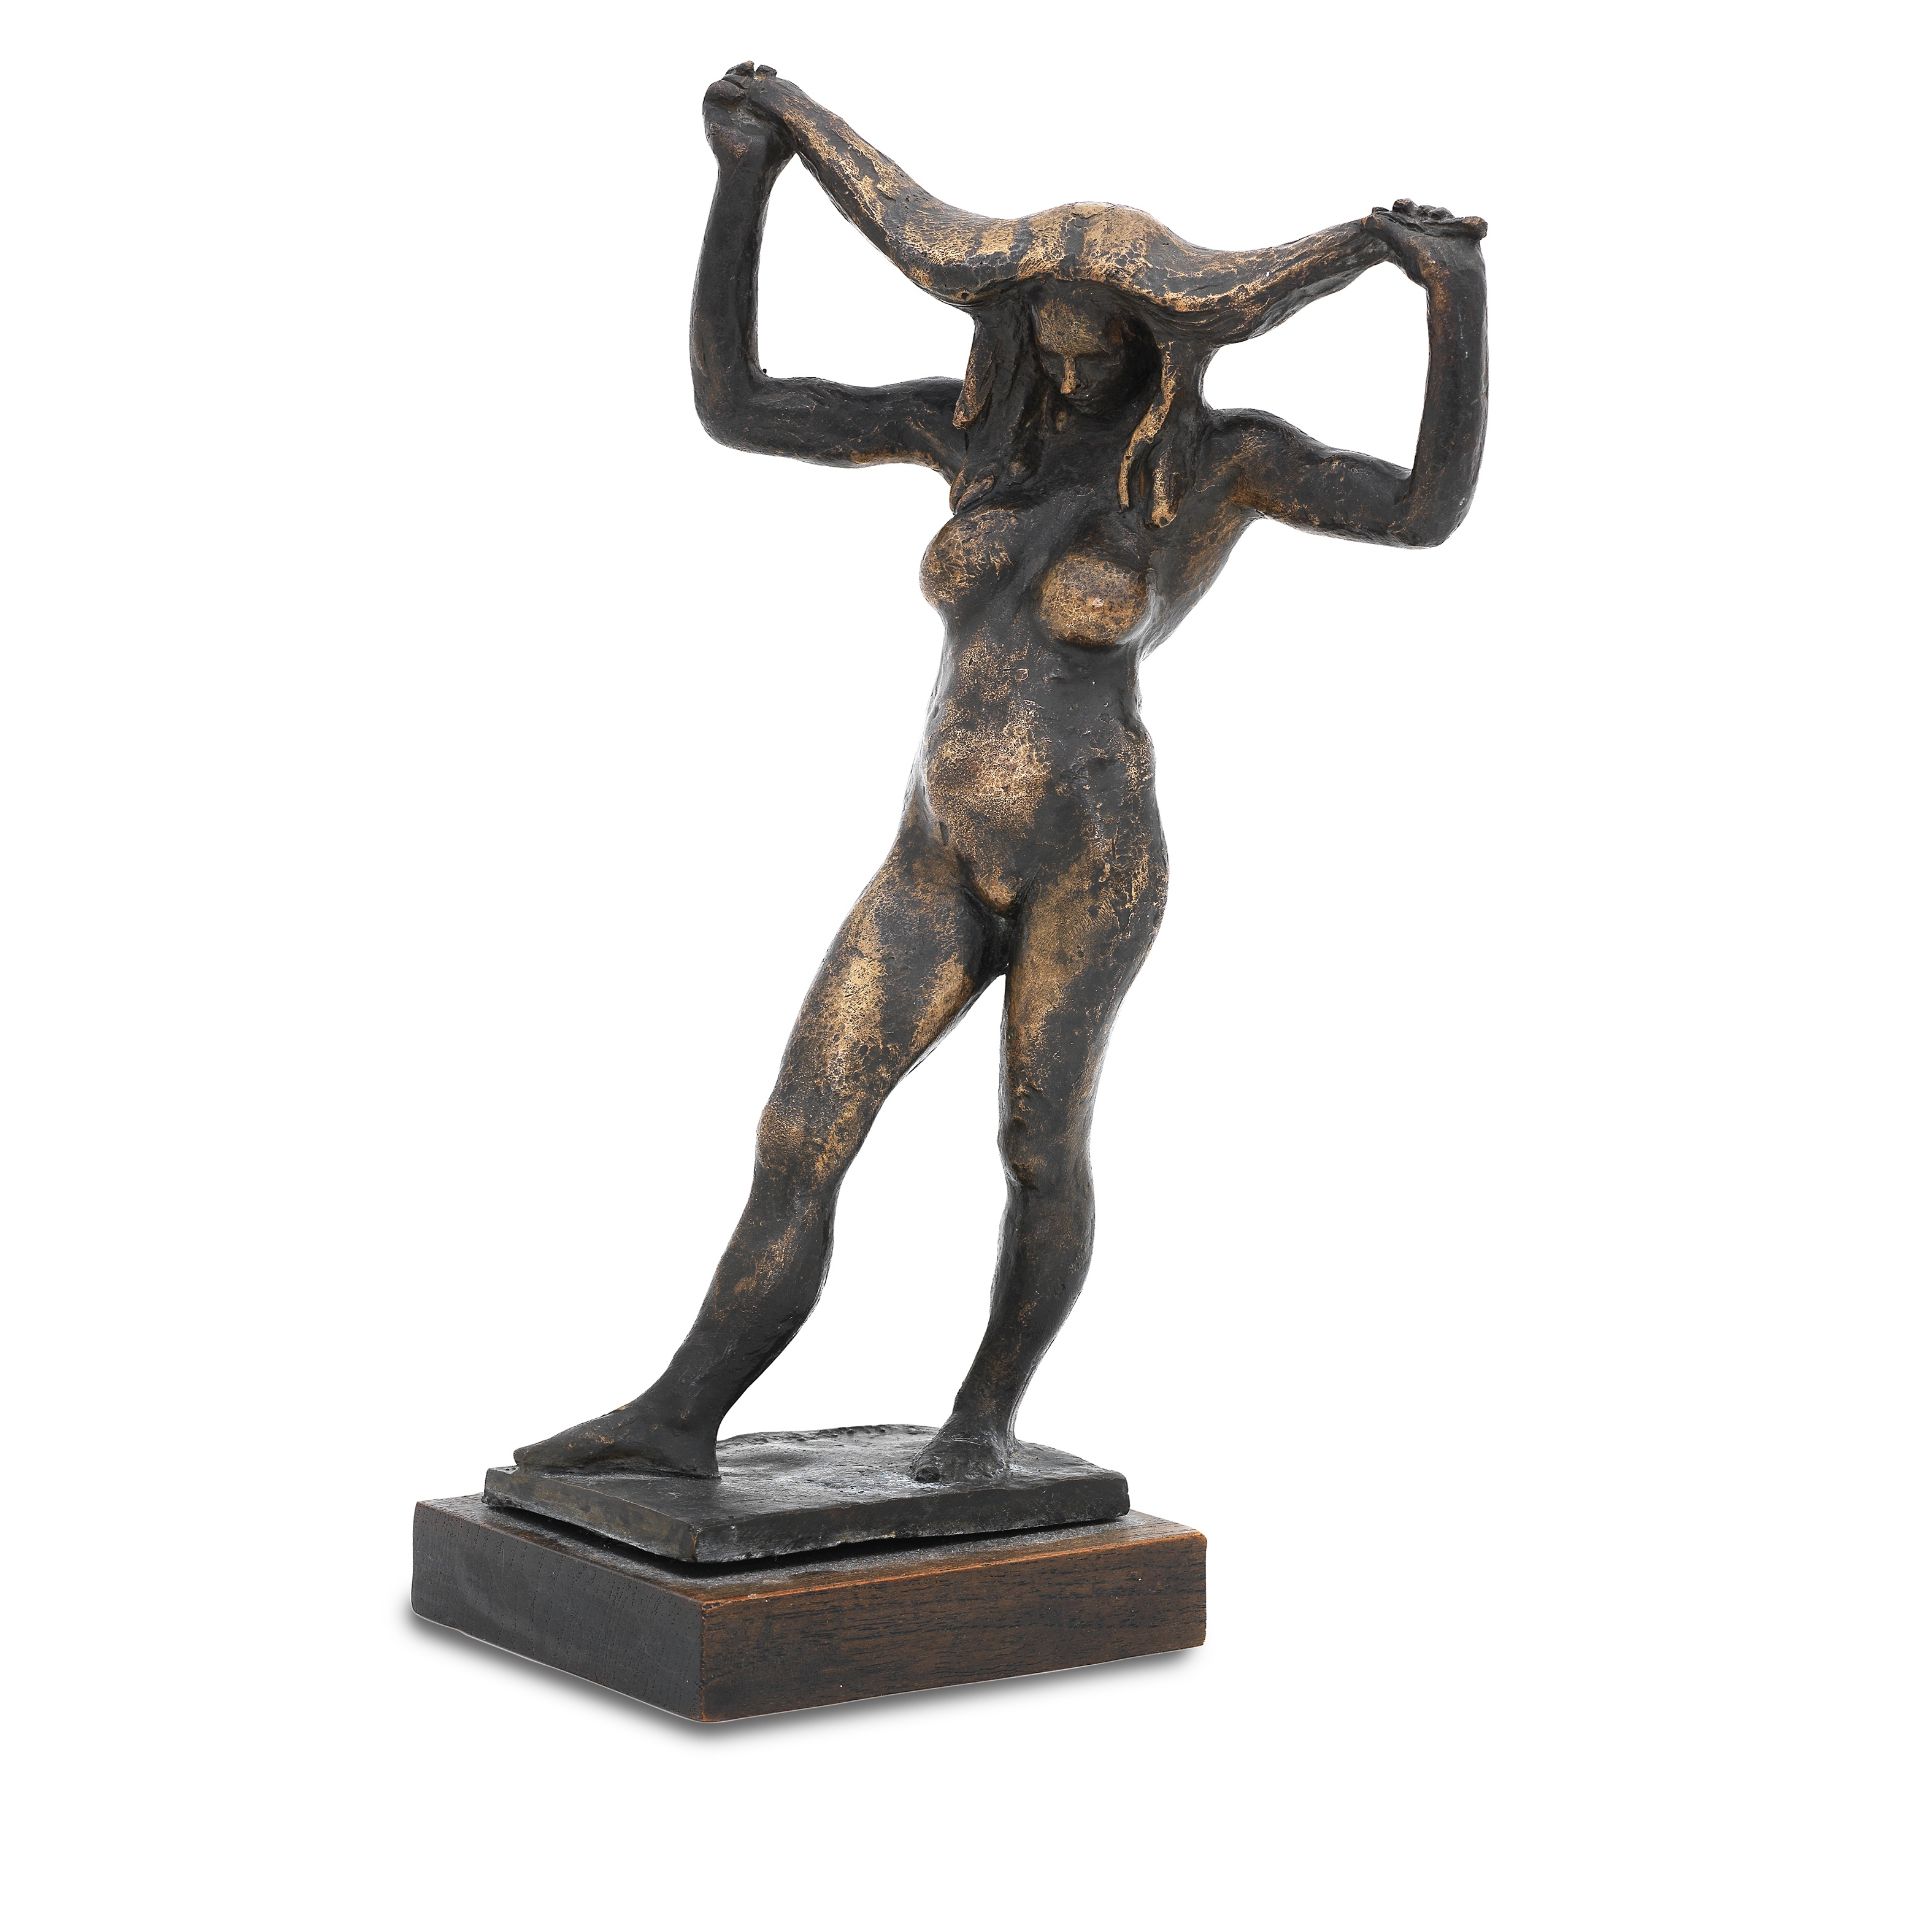 Vincent Butler RSA (British, born 1933) a bronze sculpture of a Girl with long hair